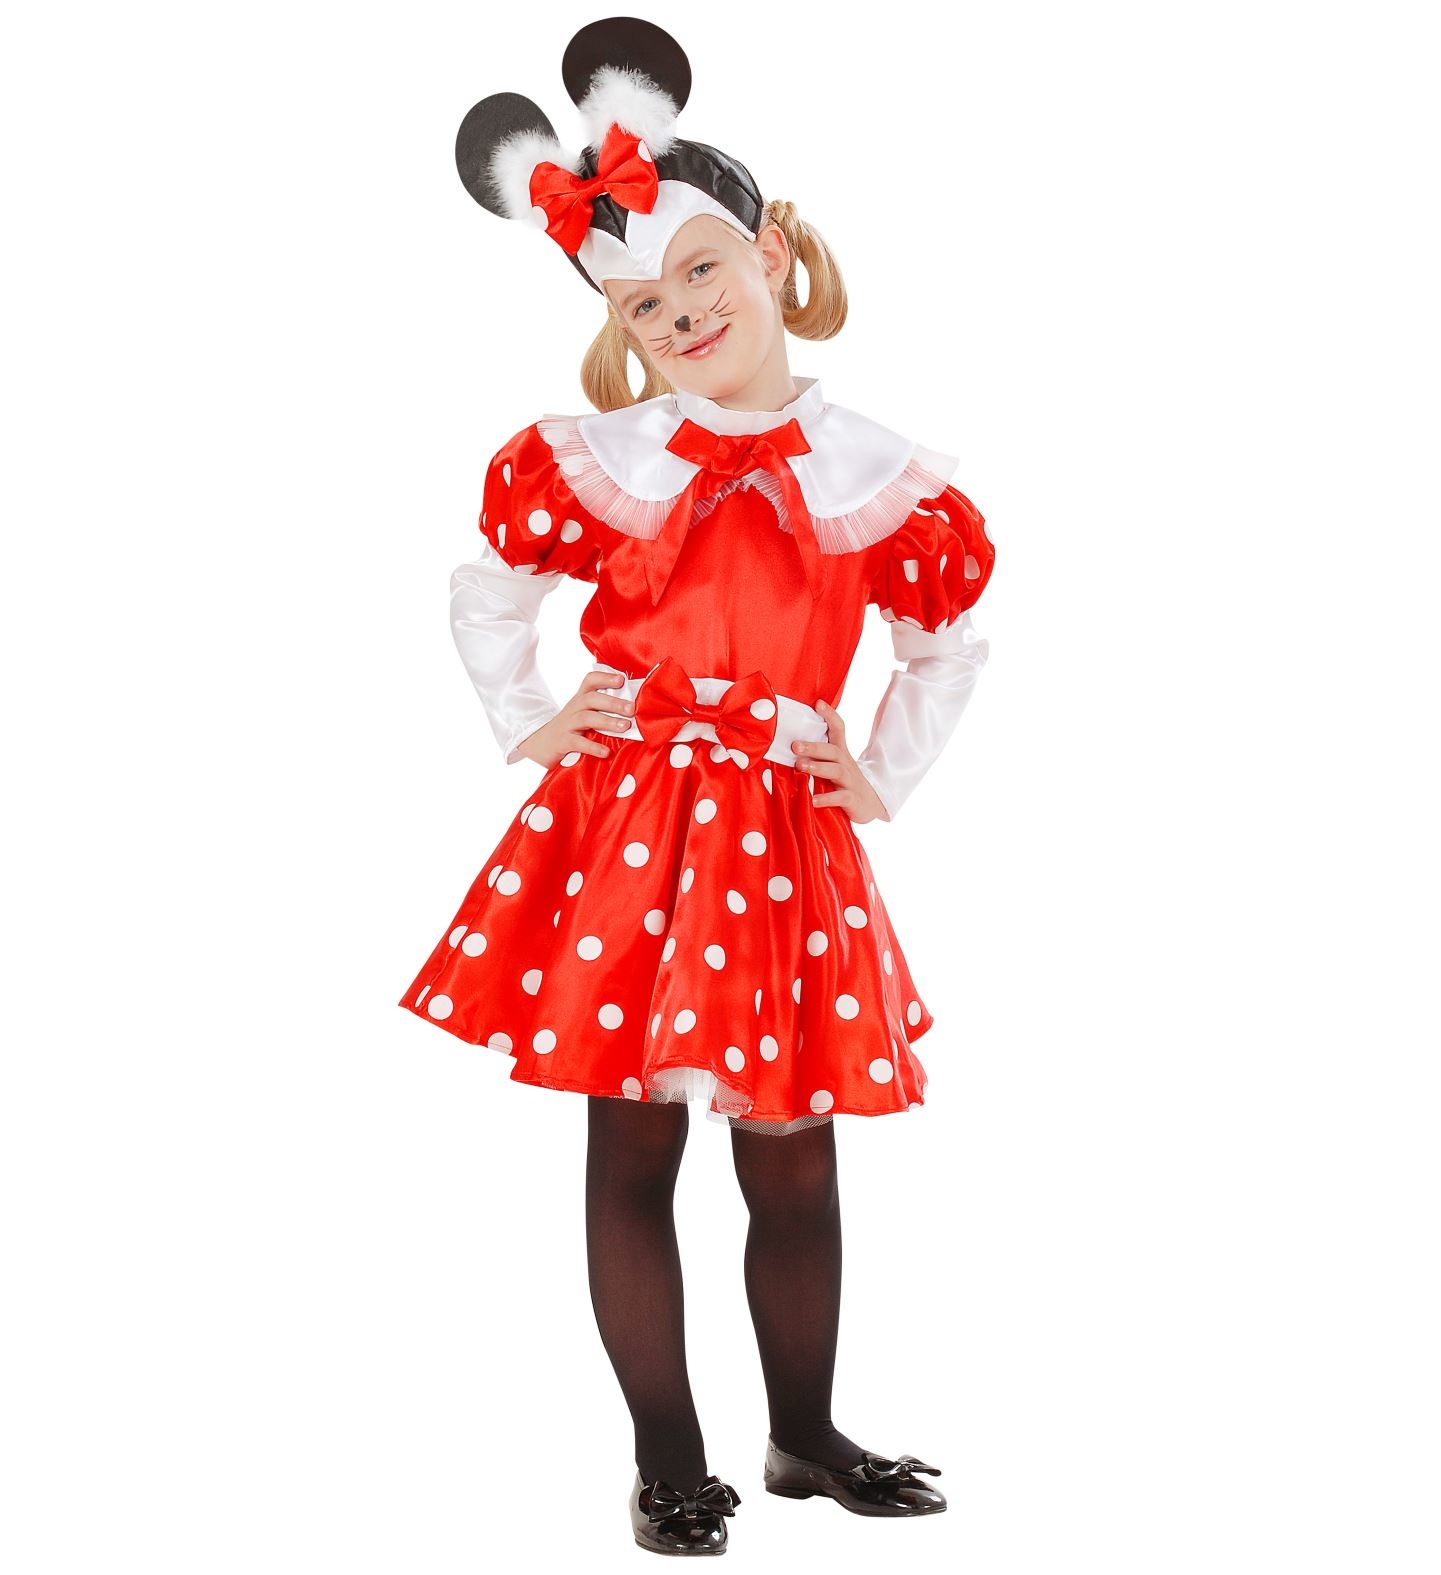 Widmann - Mickey & Minnie Mouse Kostuum - Pluizig Oortjes Muis Minnie - Meisje - rood,wit / beige - Maat 98 - Carnavalskleding - Verkleedkleding